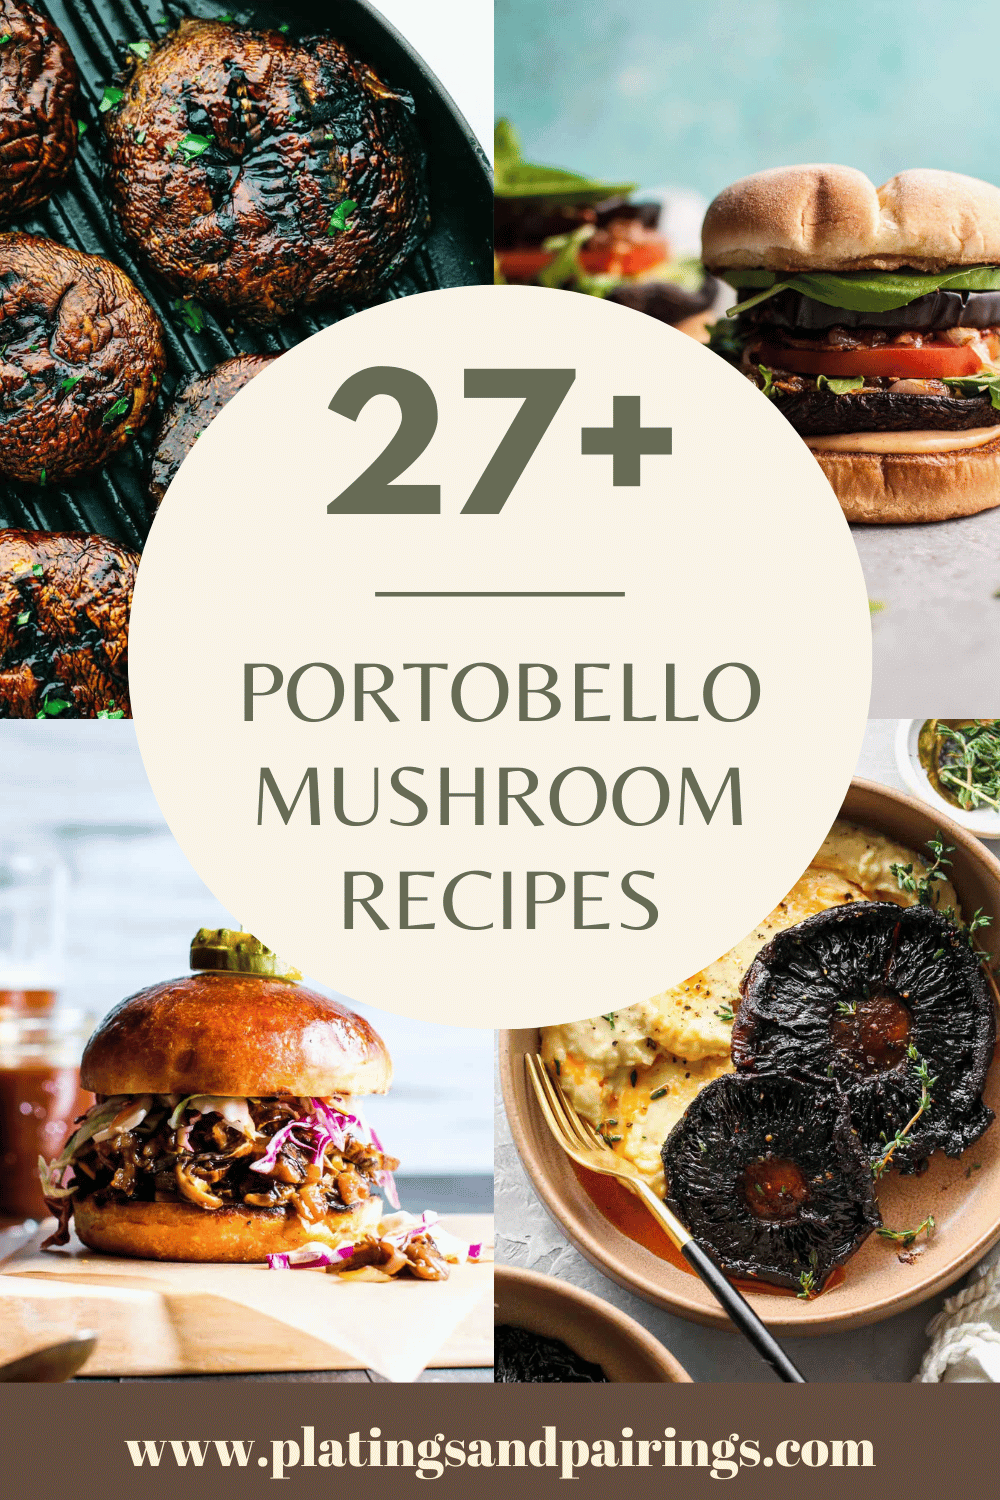 Collage of portobello mushroom recipes with text overlay.